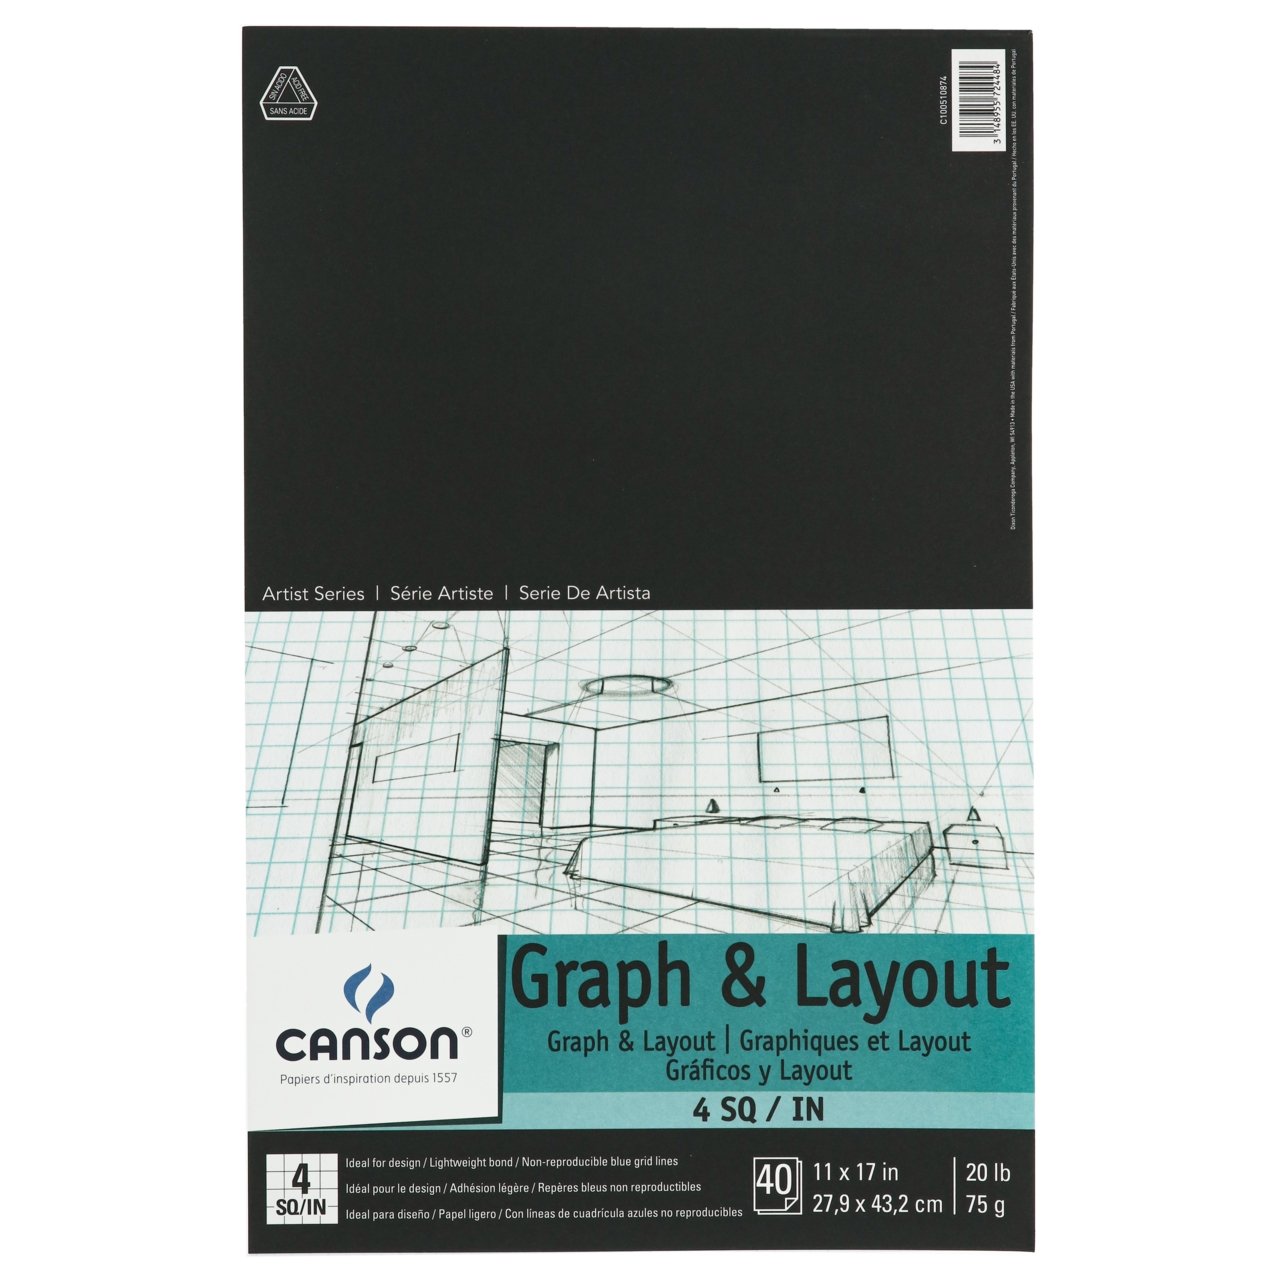 Canson Graph & Layout Paper Pad - 4 sq per inch 11X17 - merriartist.com